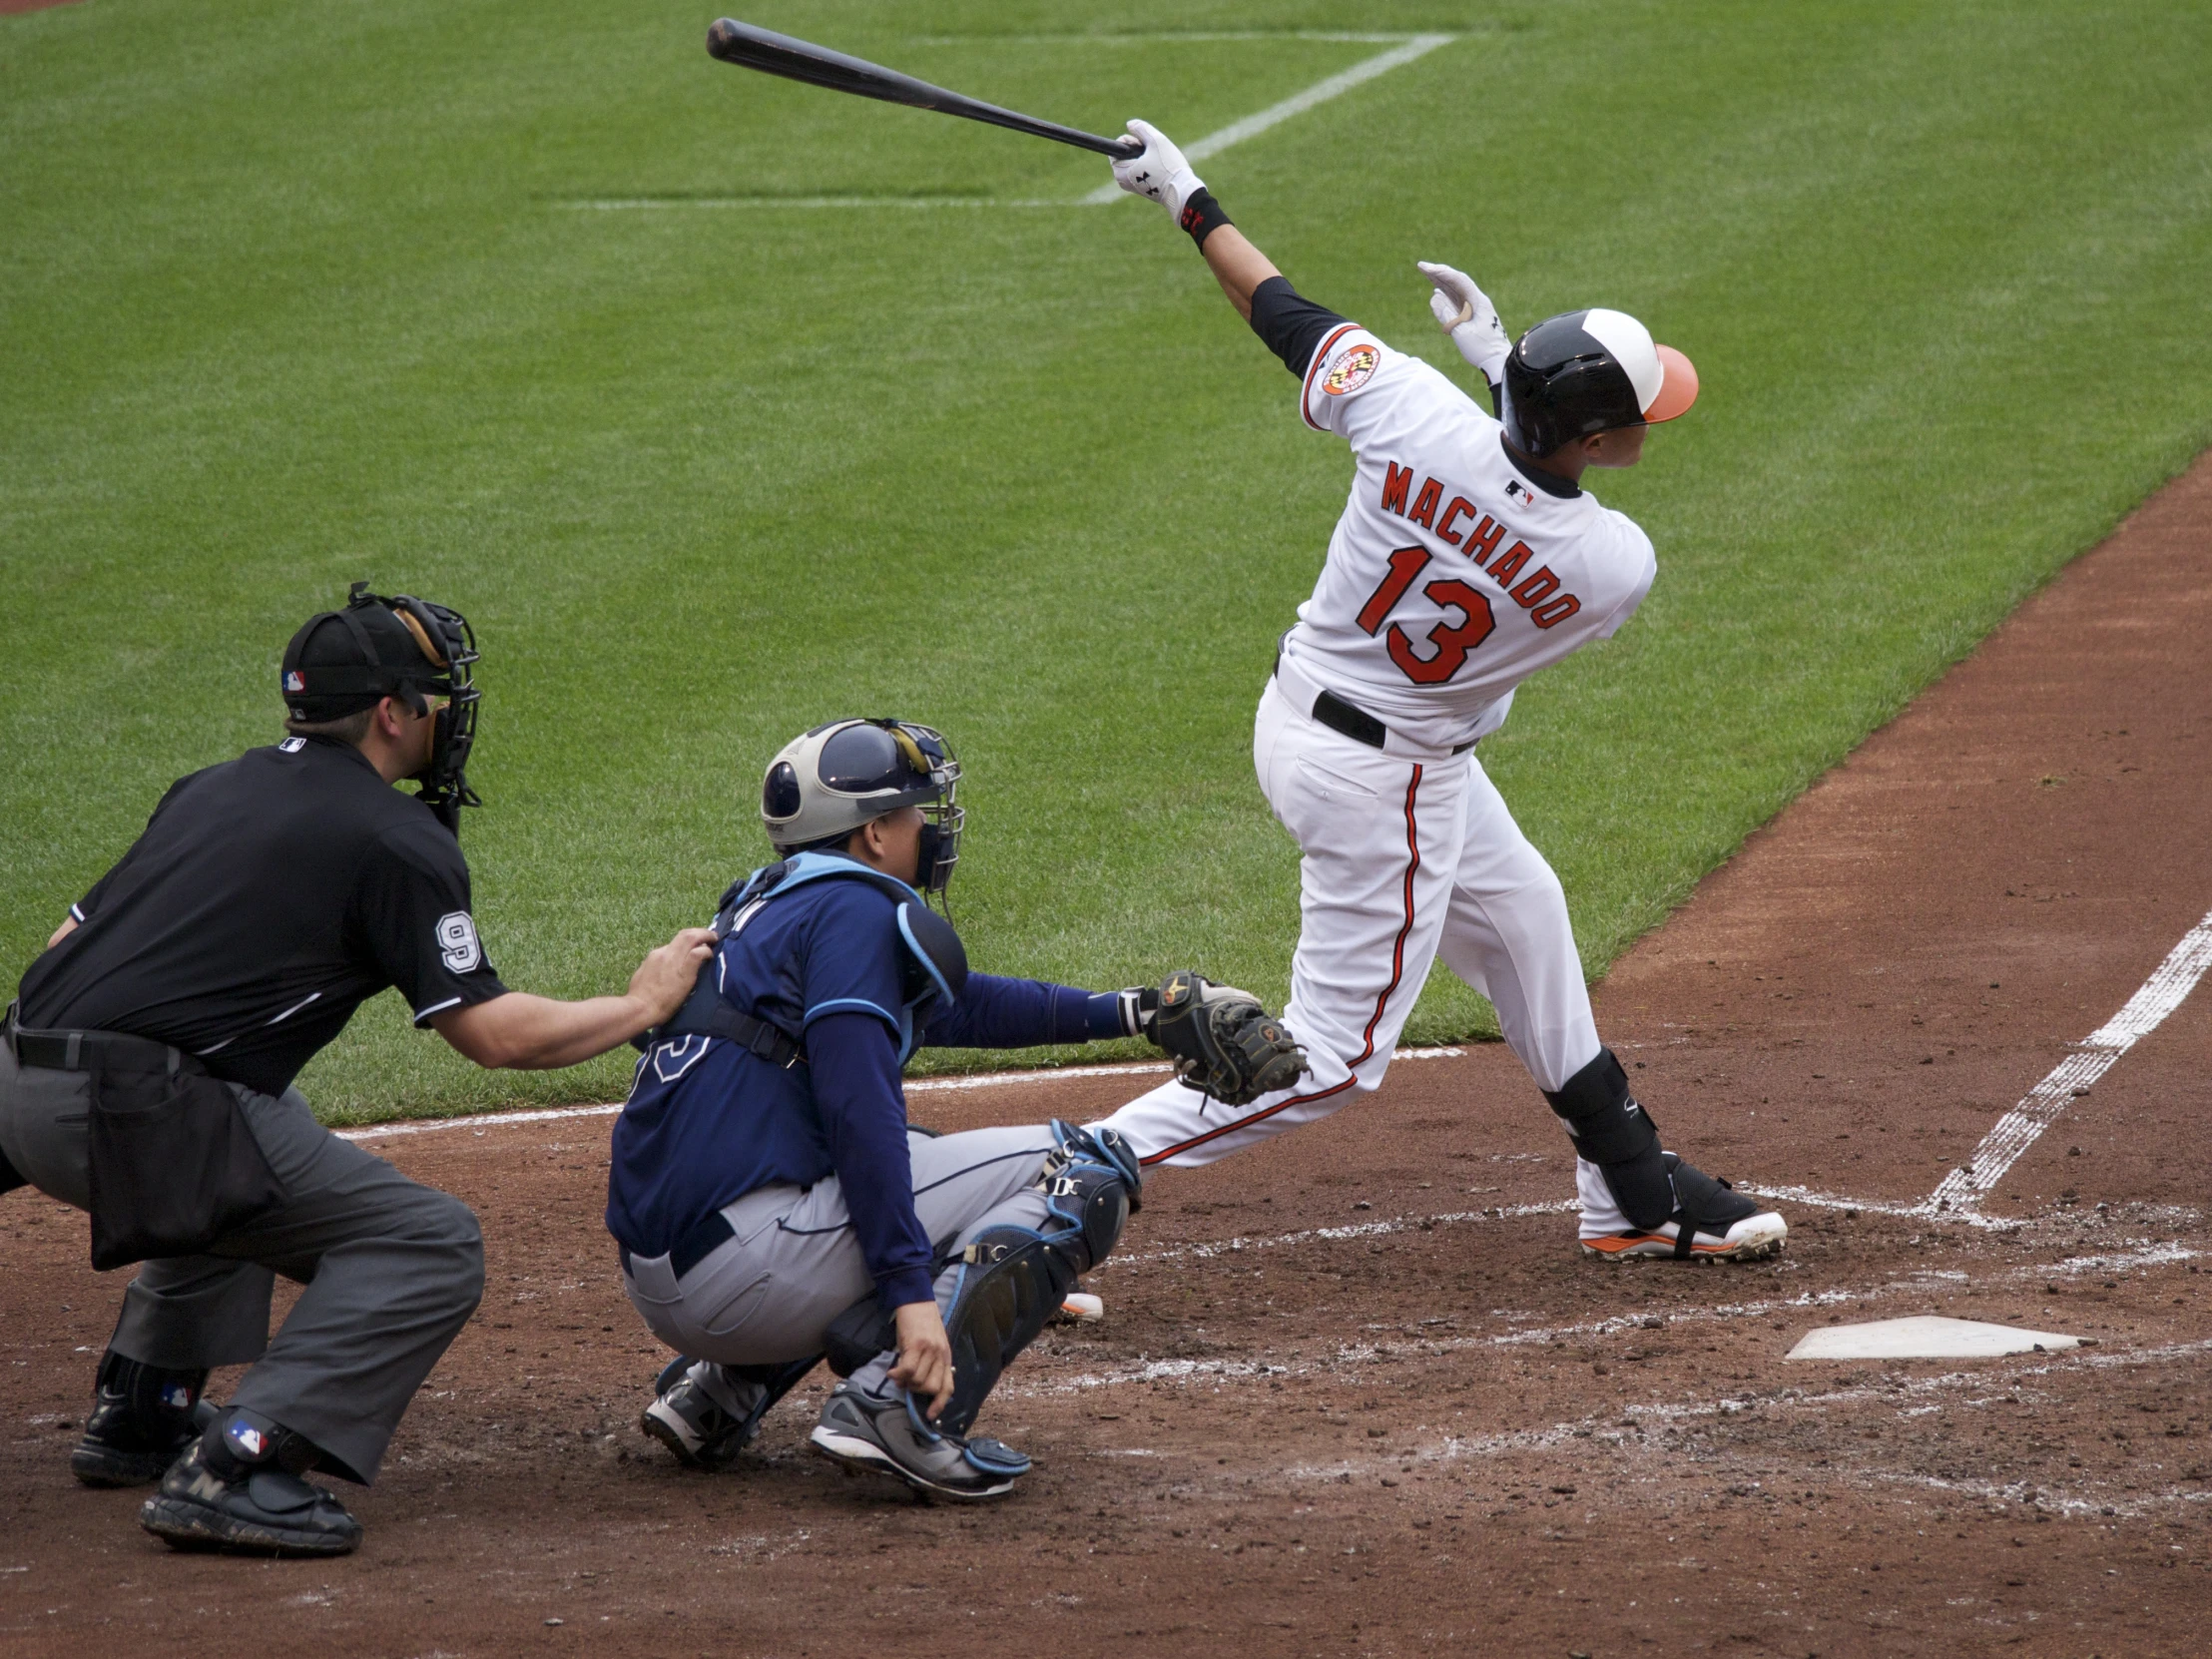 a baseball player is swinging a bat at a ball